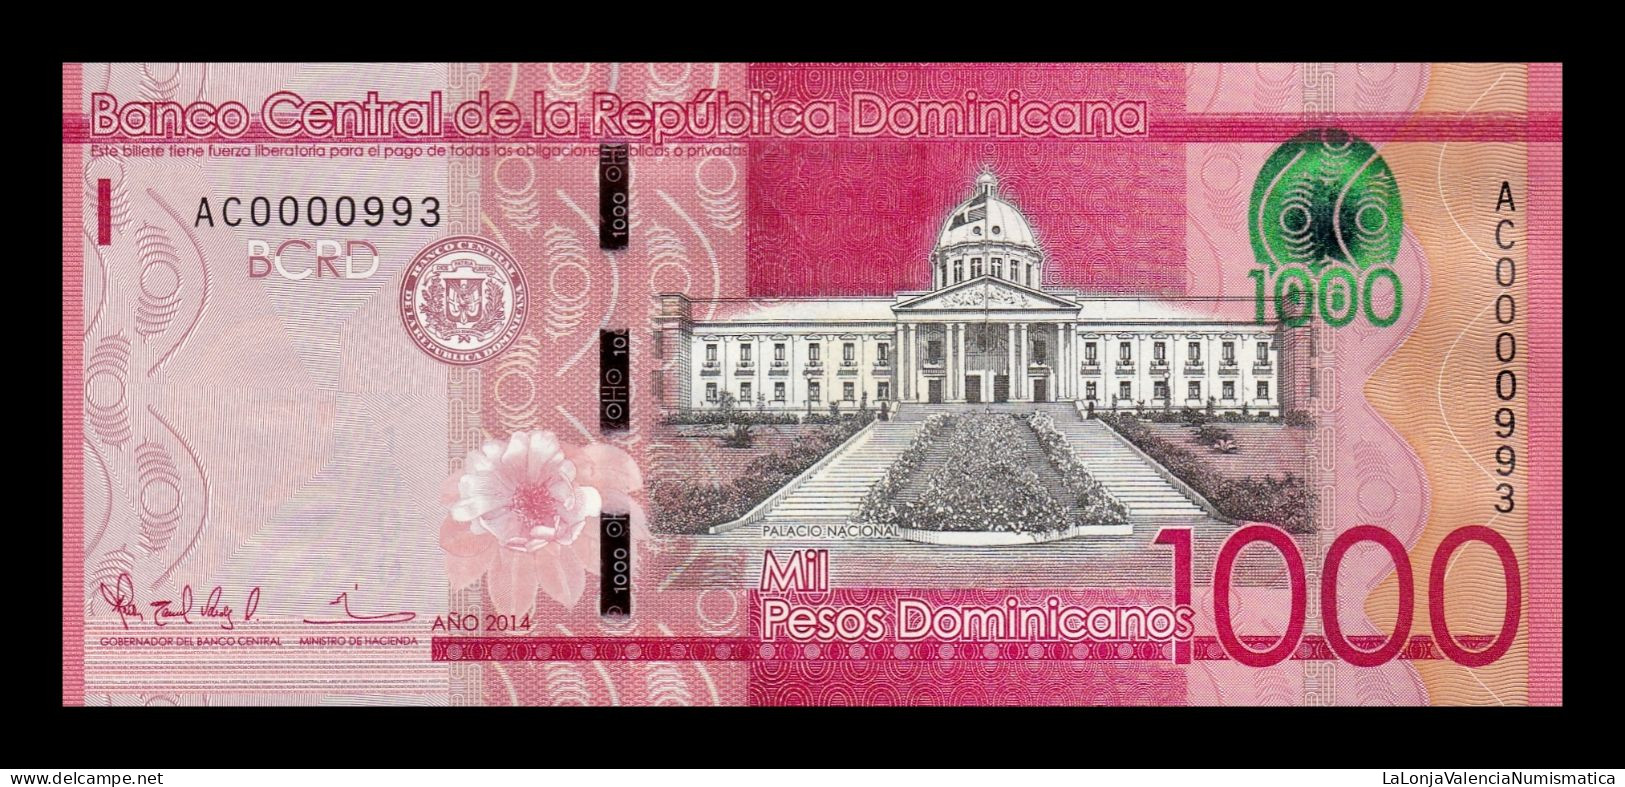 República Dominicana 1000 Pesos Dominicanos 2014 Pick 193a Low Serial 993 Sc Unc - Dominicaine